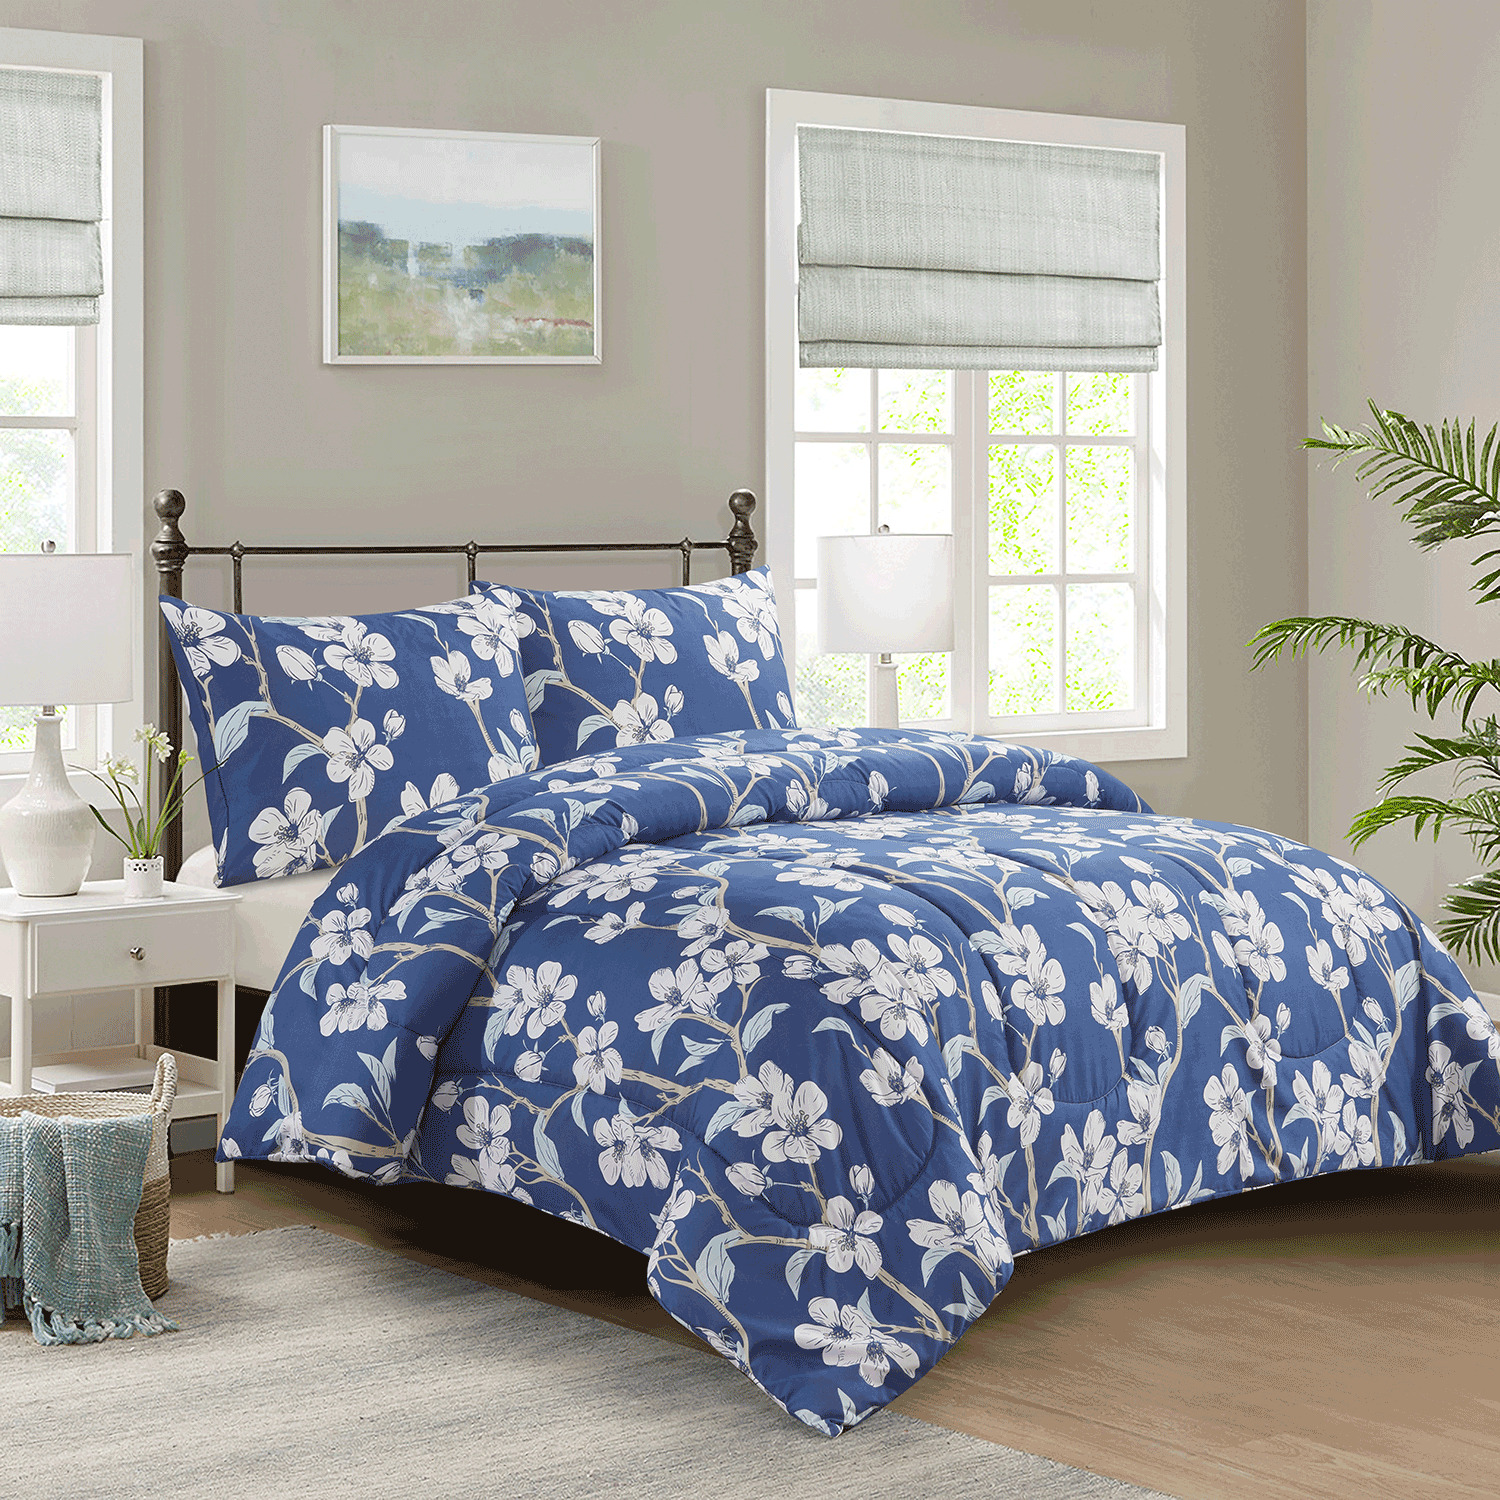 Marigold - Quilted comforter set, 2 pcs - Floral print